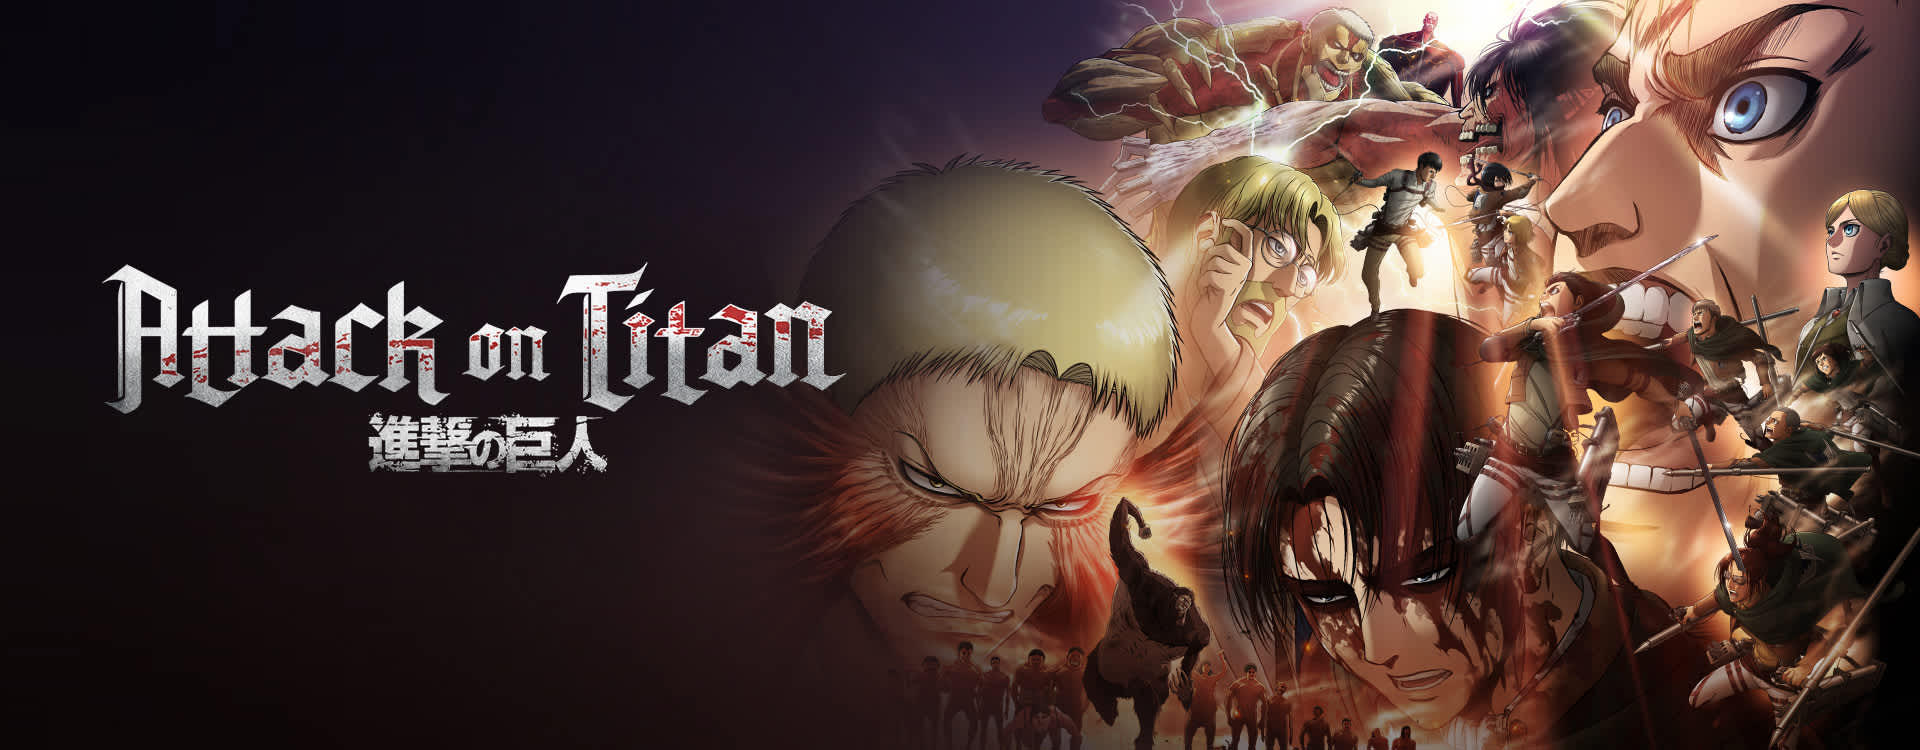 attack on titan season 1 english dub download torrent